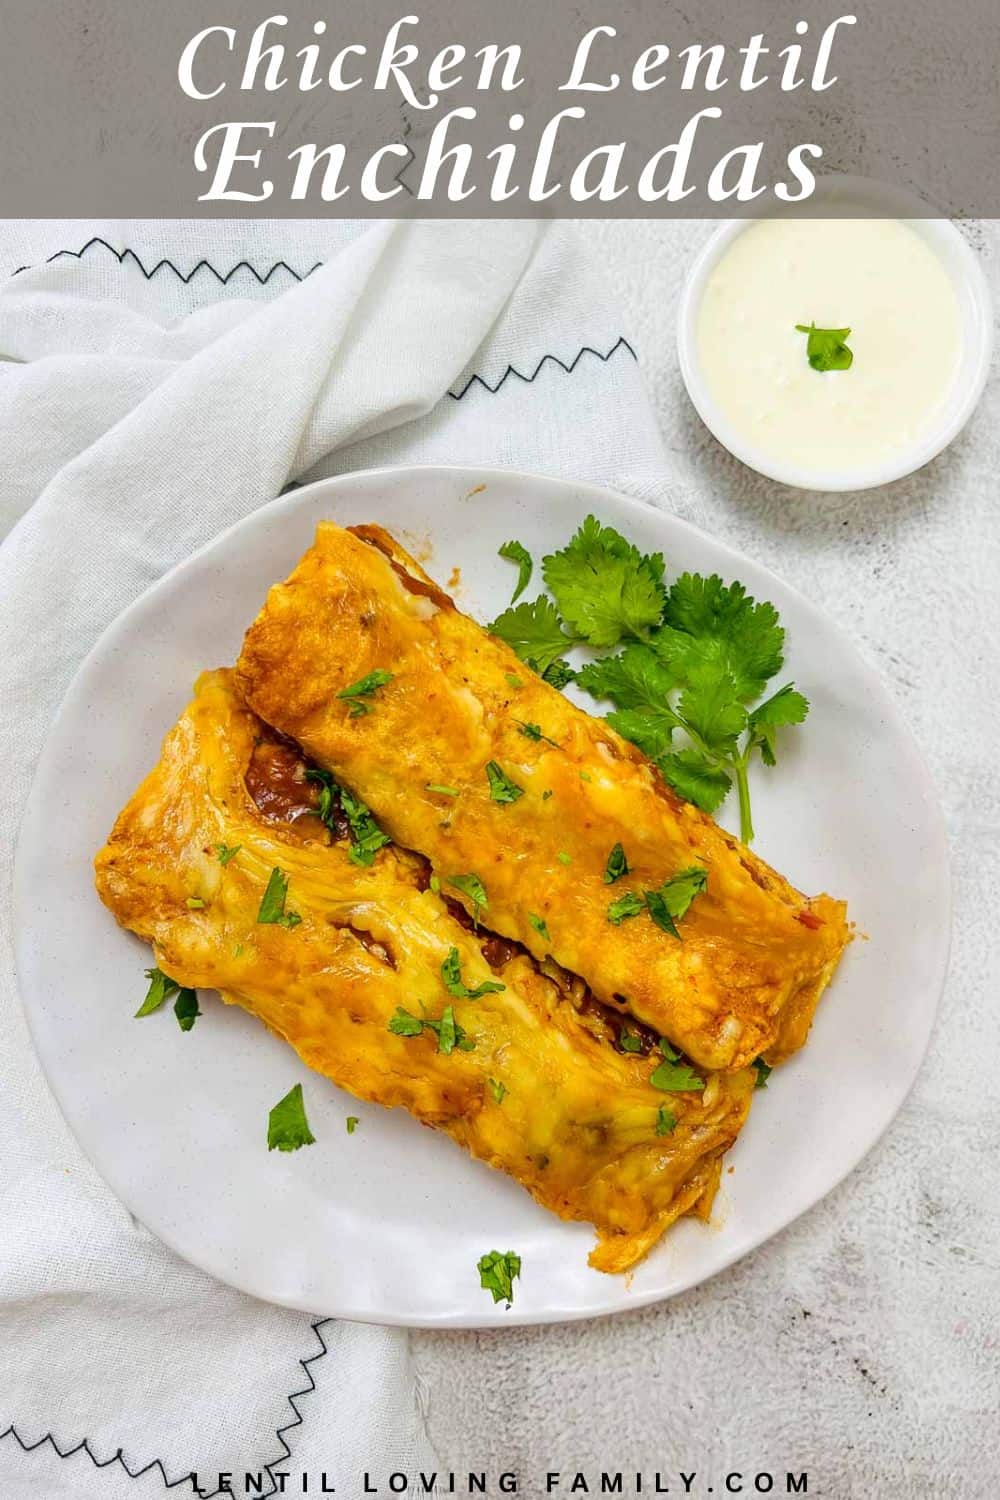 Chicken & lentil enchiladas Pinterest image.